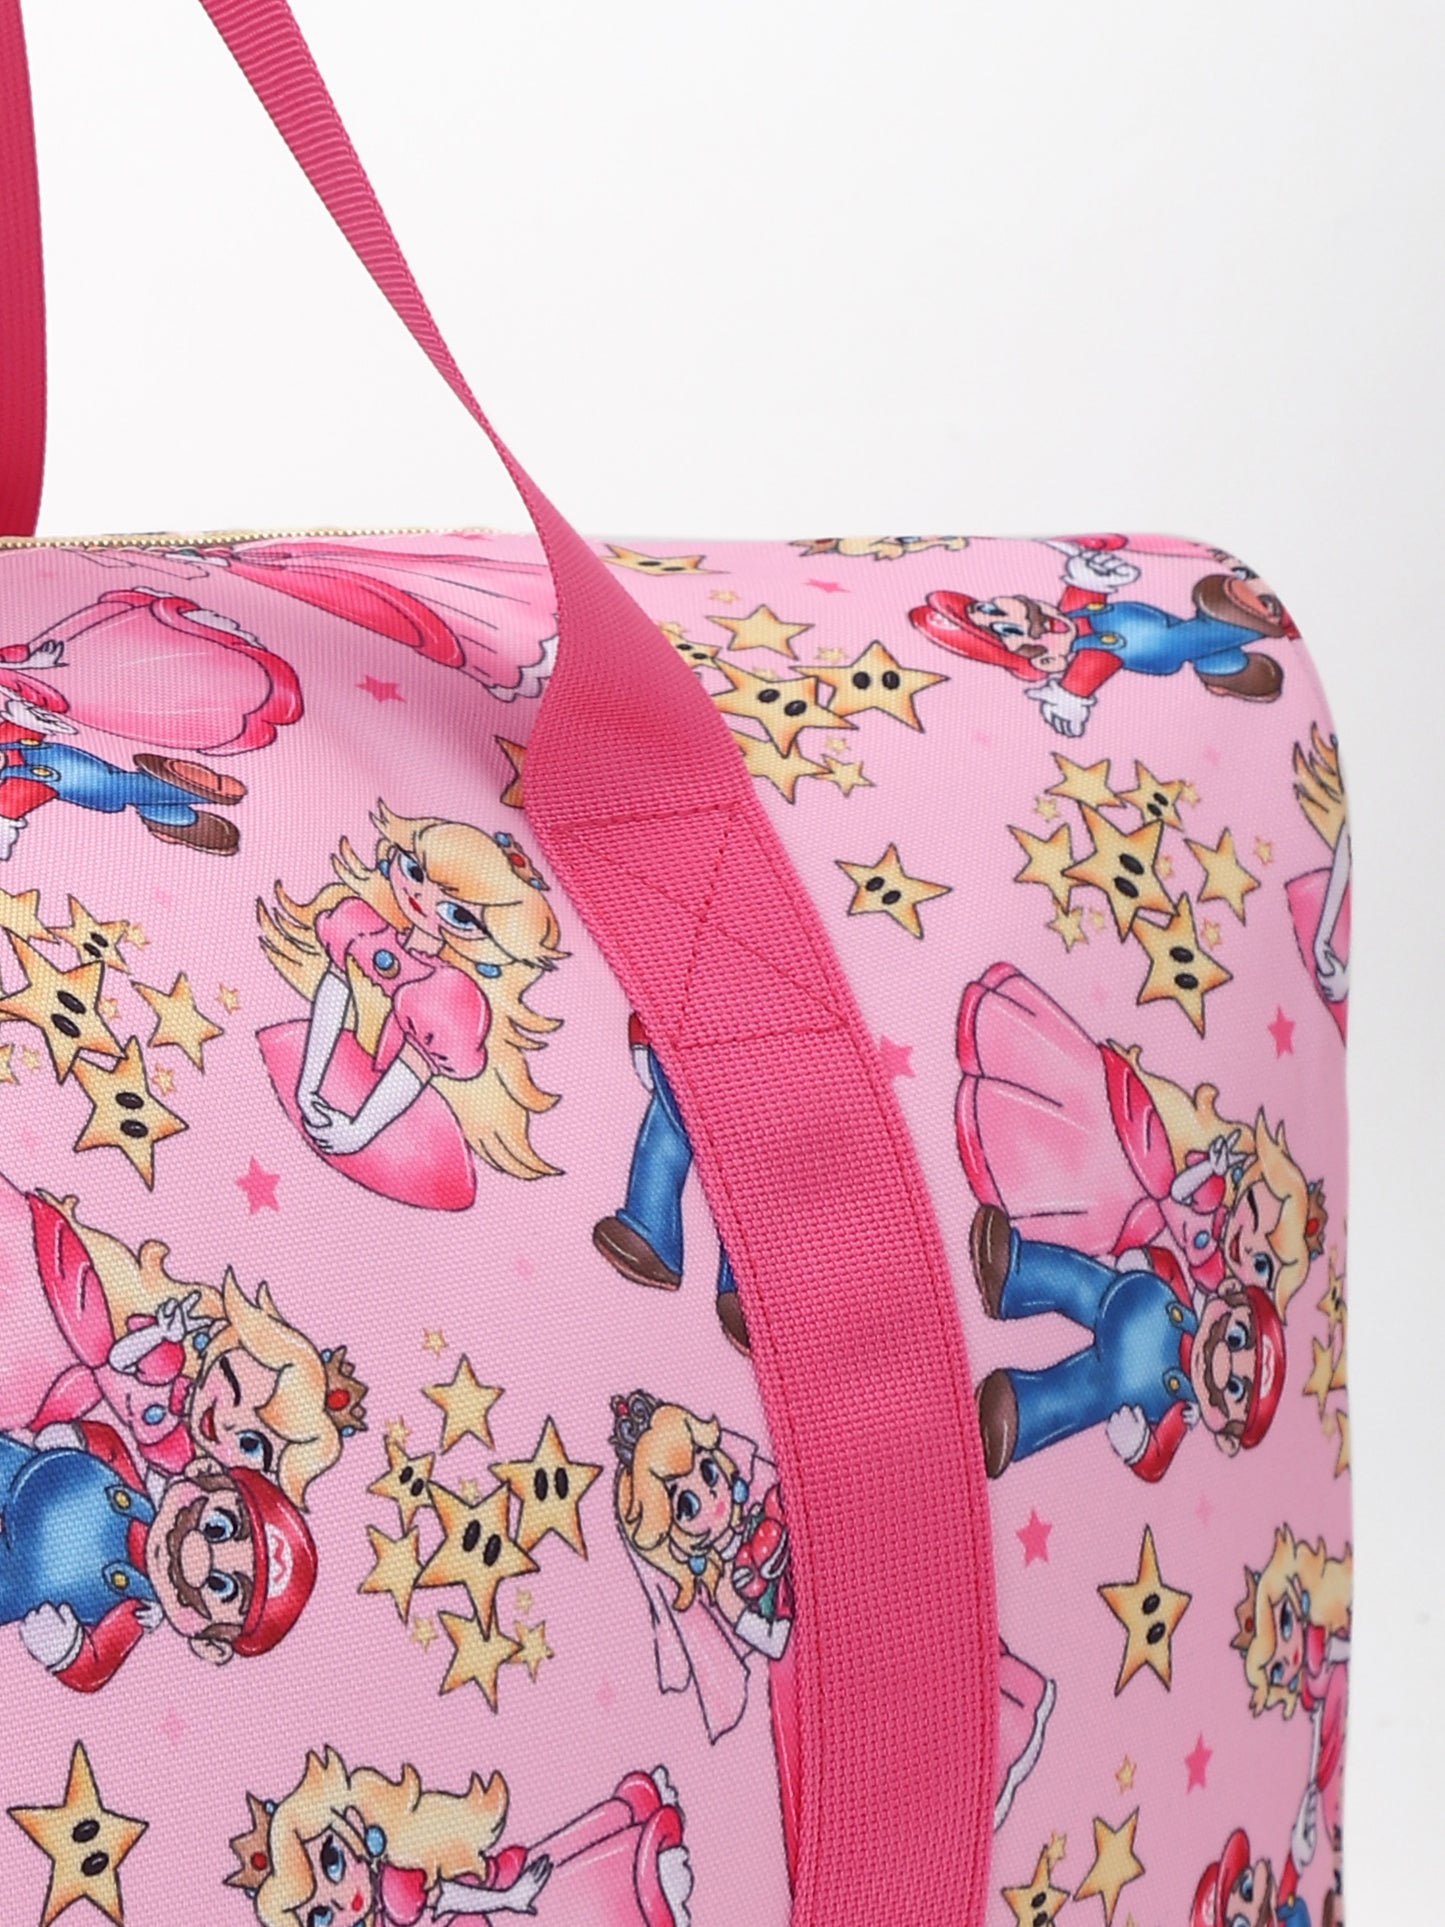 Pink Stars Princess Girls Duffel Bag